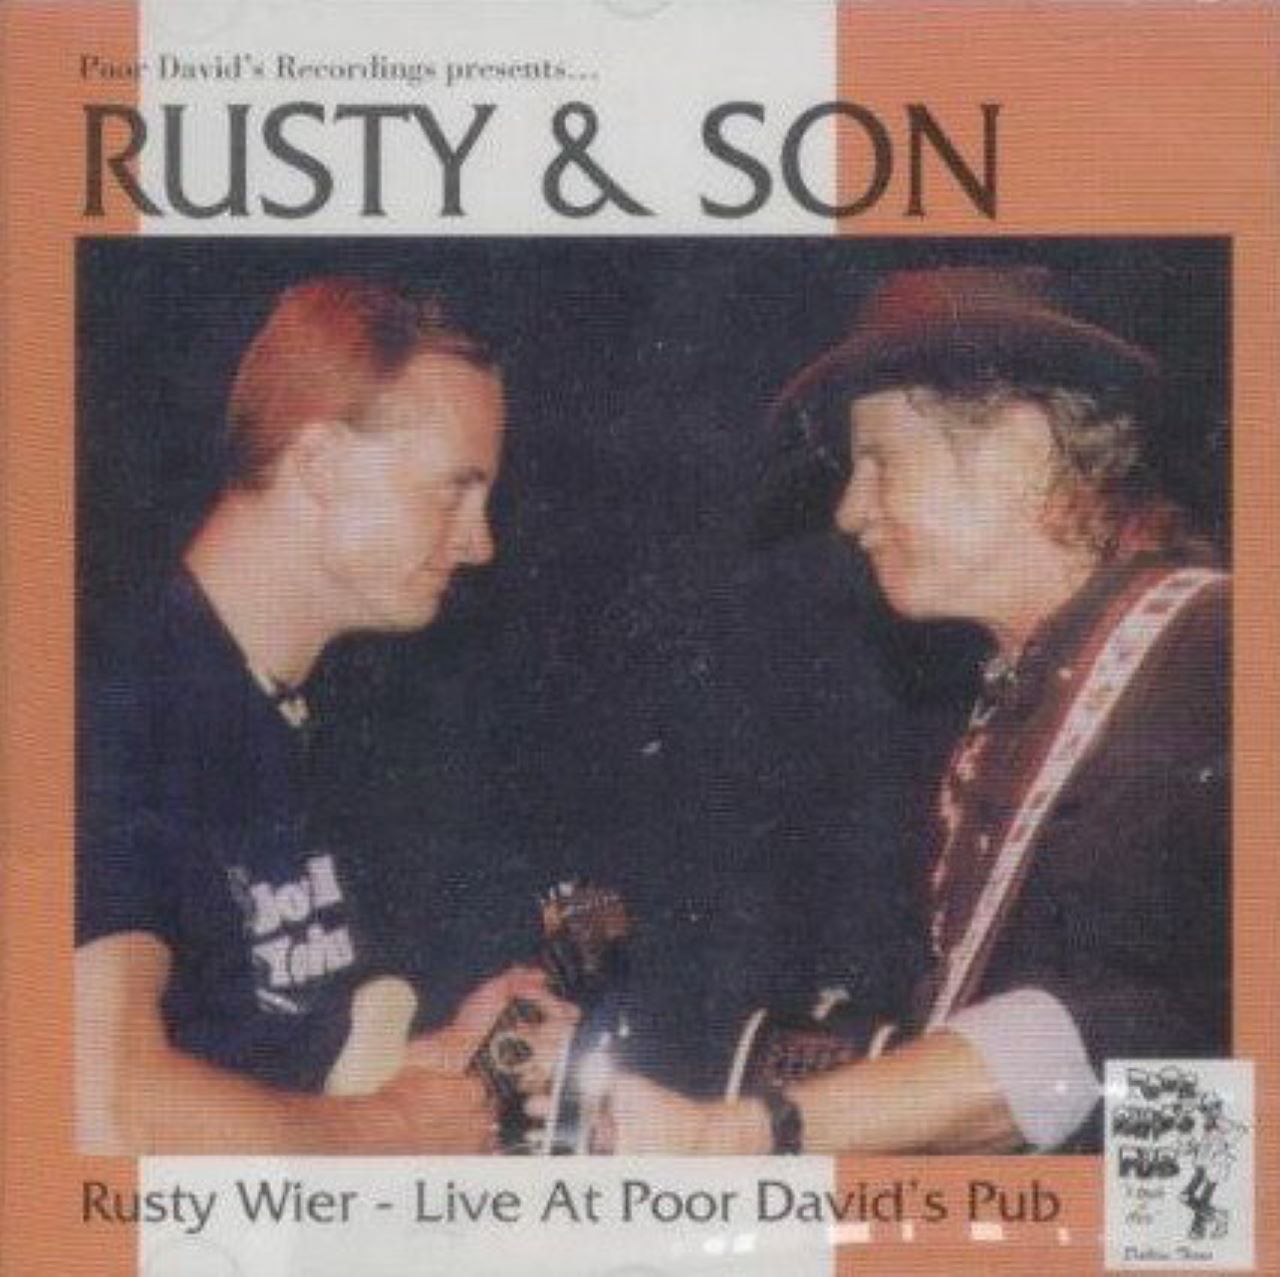 Rusty Wier - Rusty & Son – Live At Poor David’s Pub cover album